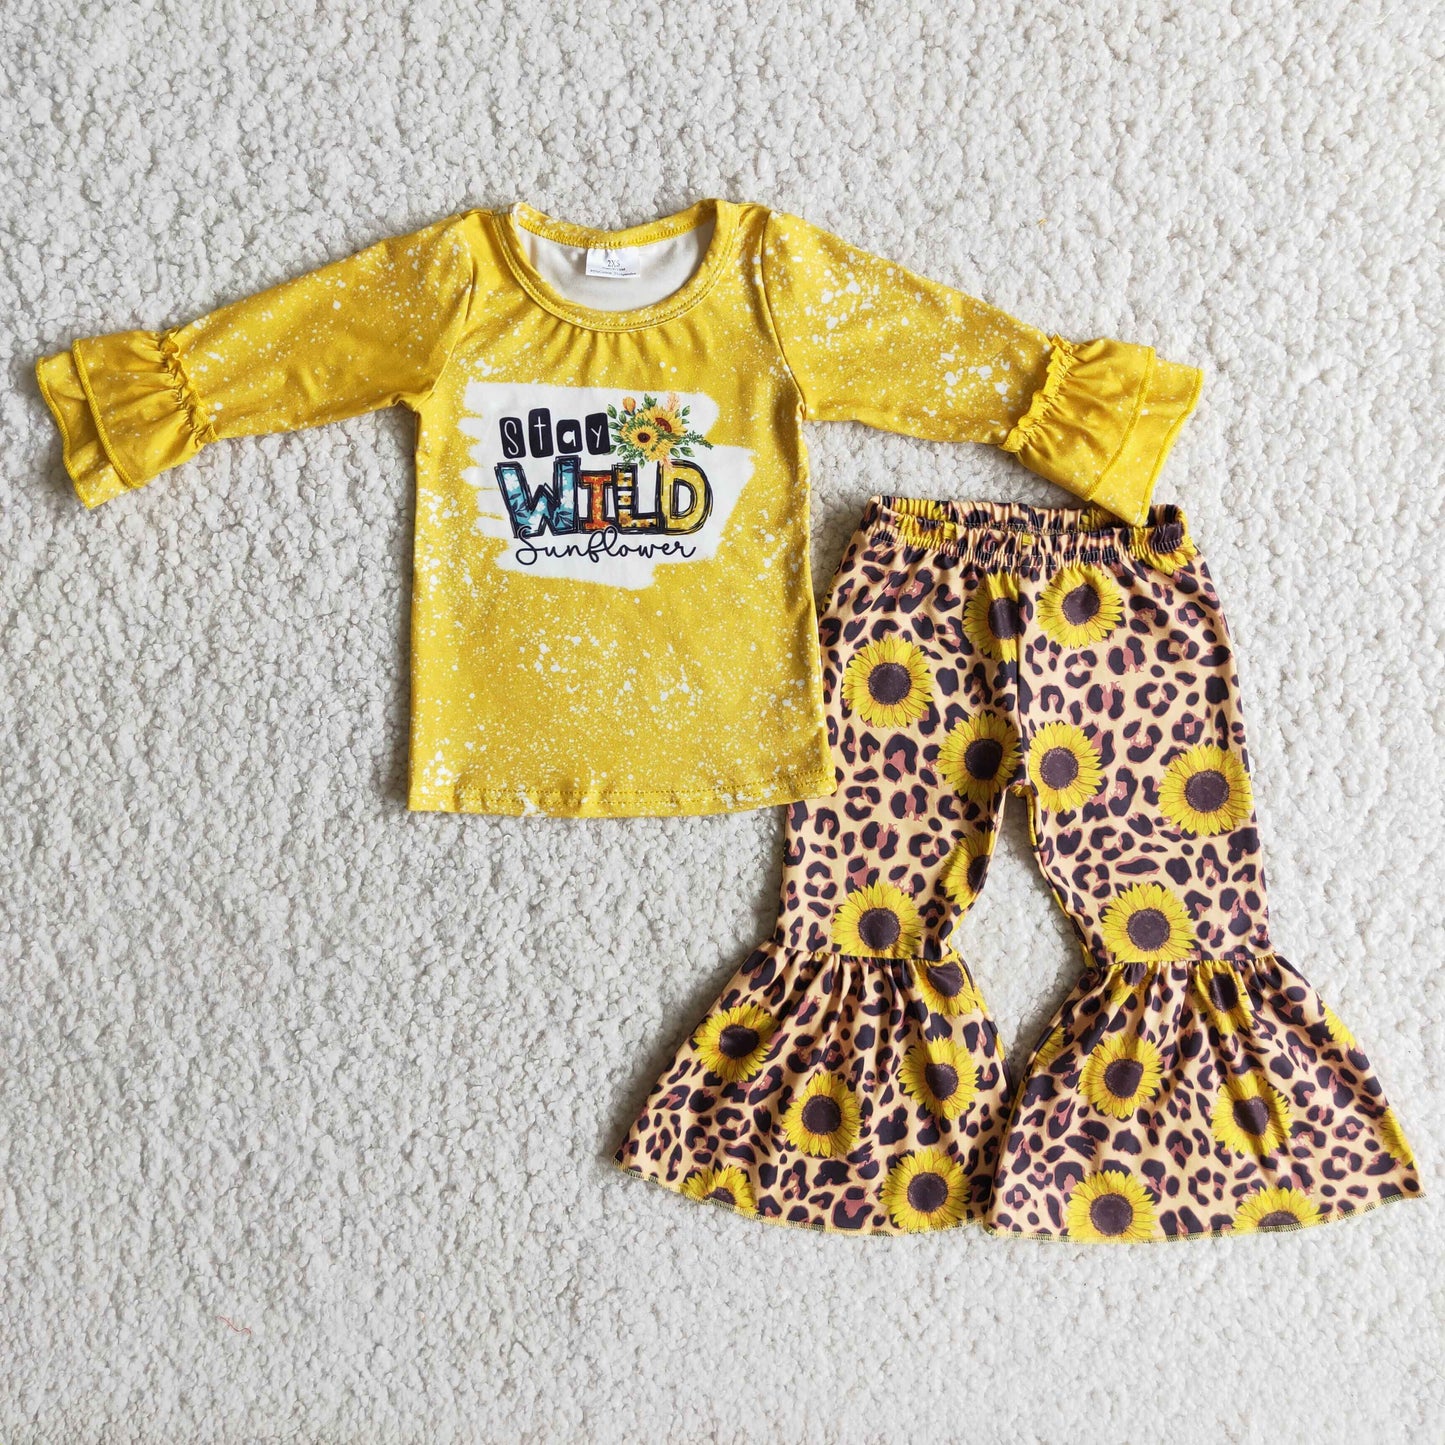 stay wild sunflower shirt leopard pants clothing set